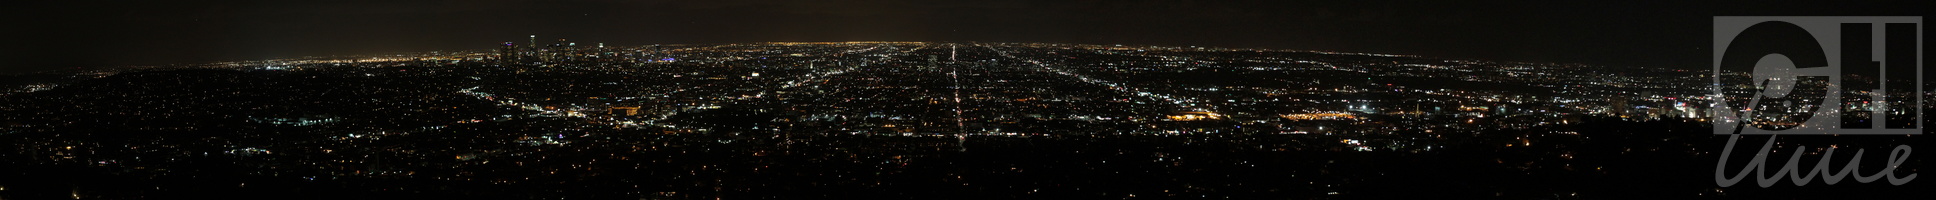 Los Angeles by night - Panorama